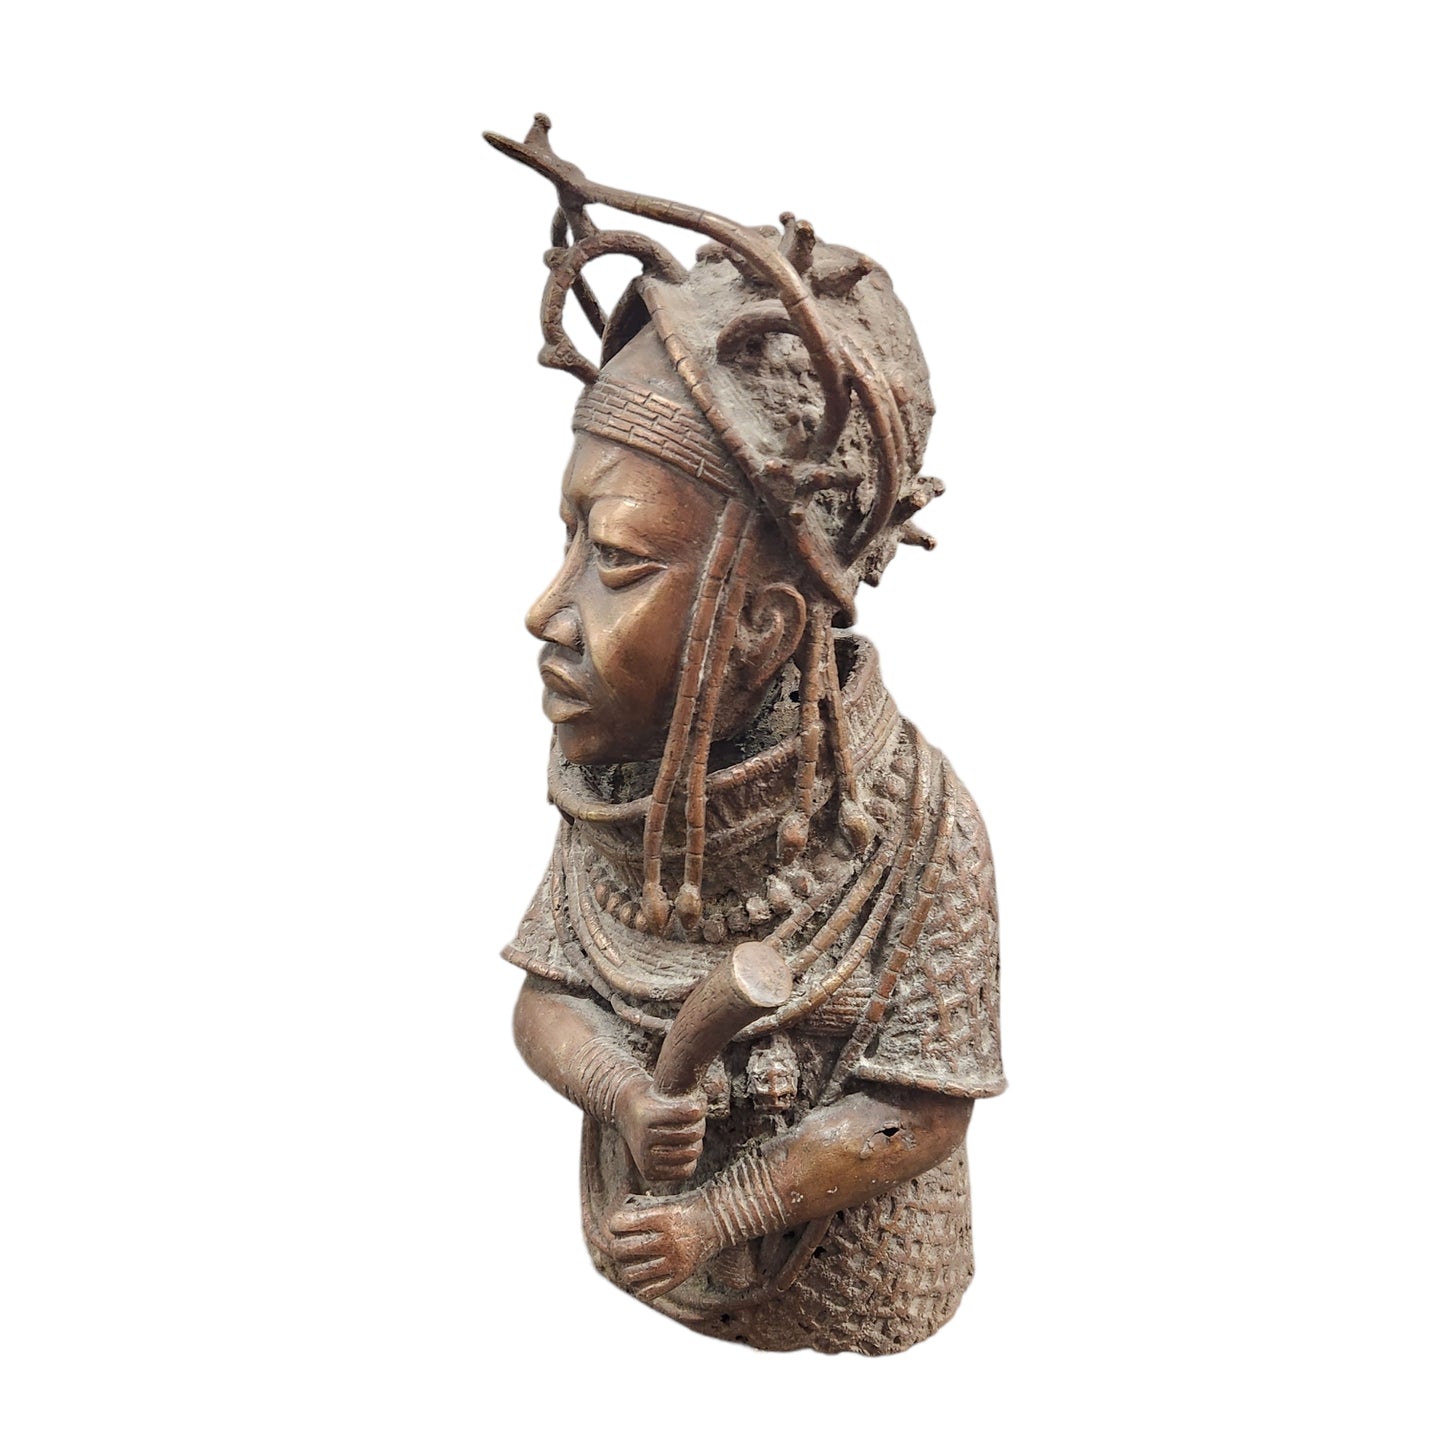 Benin Bronze Statue from Nigeria (18th Century) - MD African Art